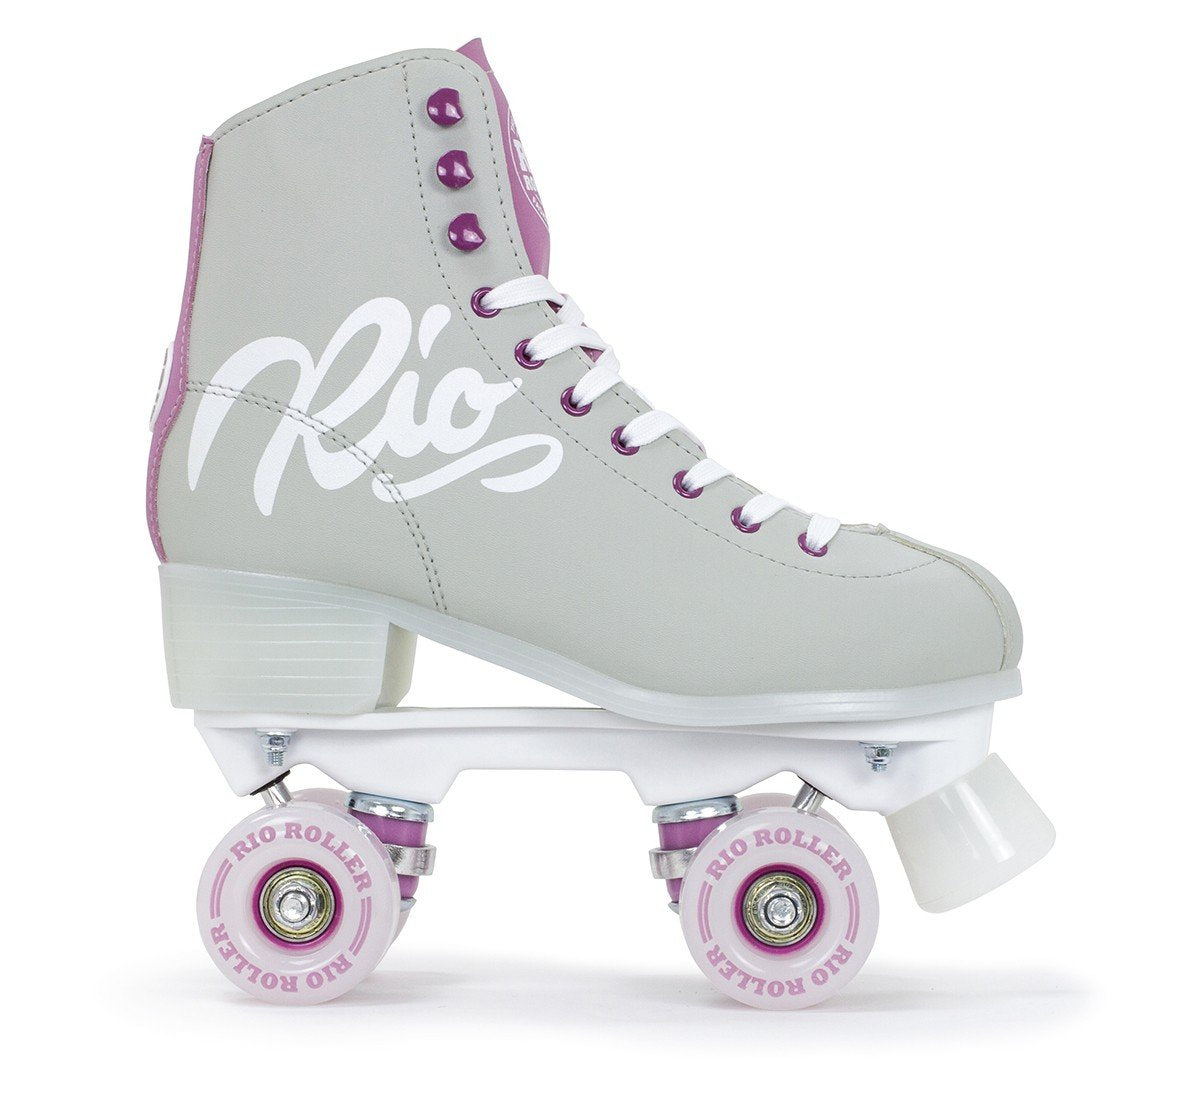 Rio Roller Script Roller Skates Grey and Purple - ON SALE